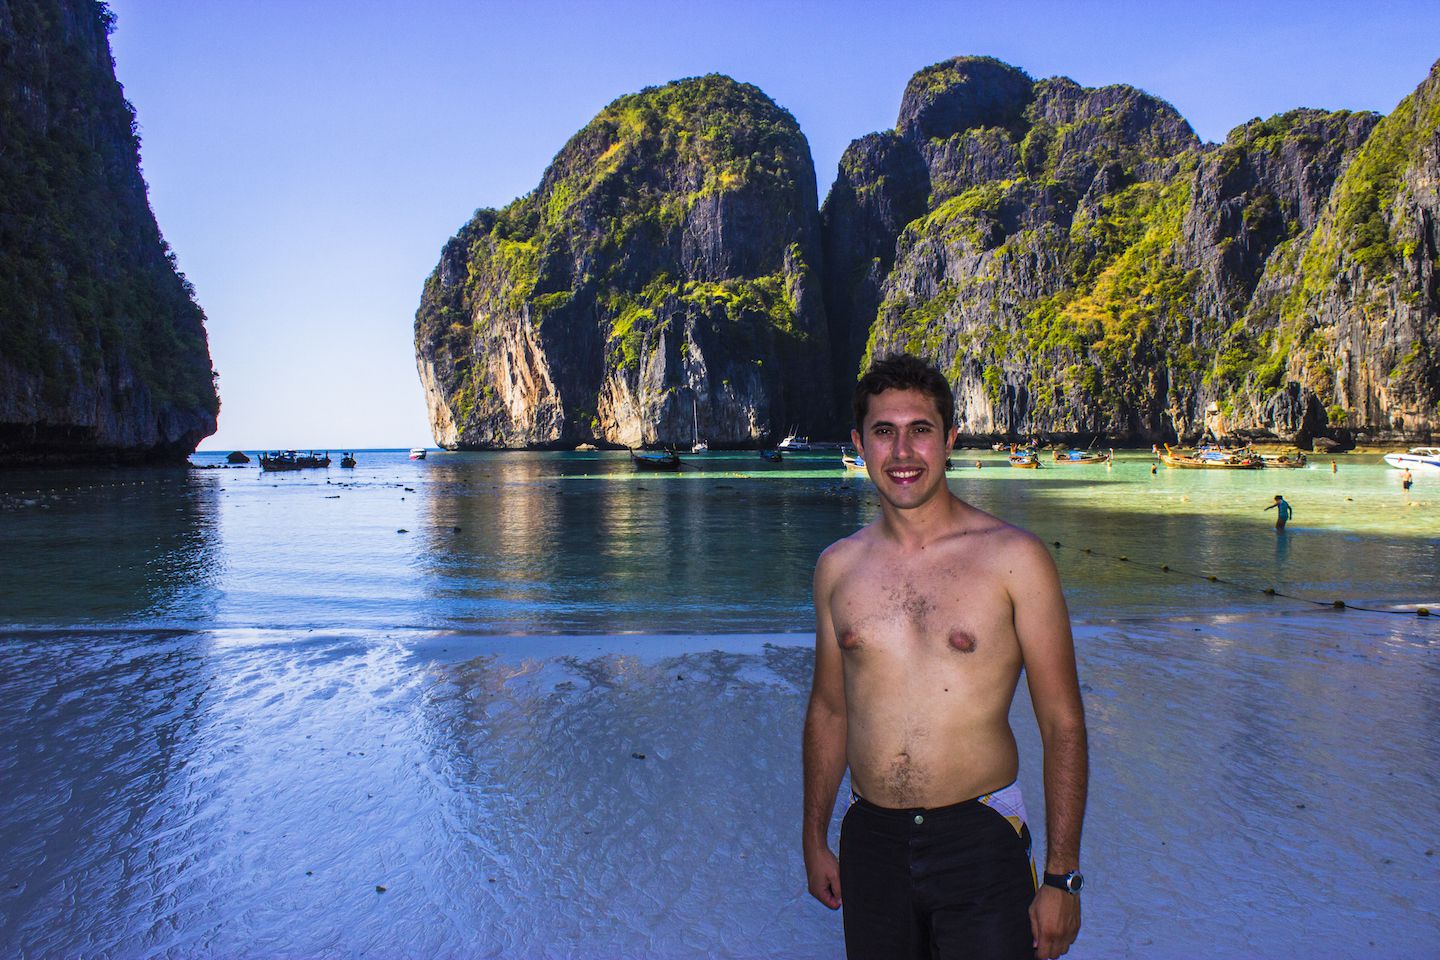 Carlos at Maya Bay, Koh Phi Phi Leh, Thailand